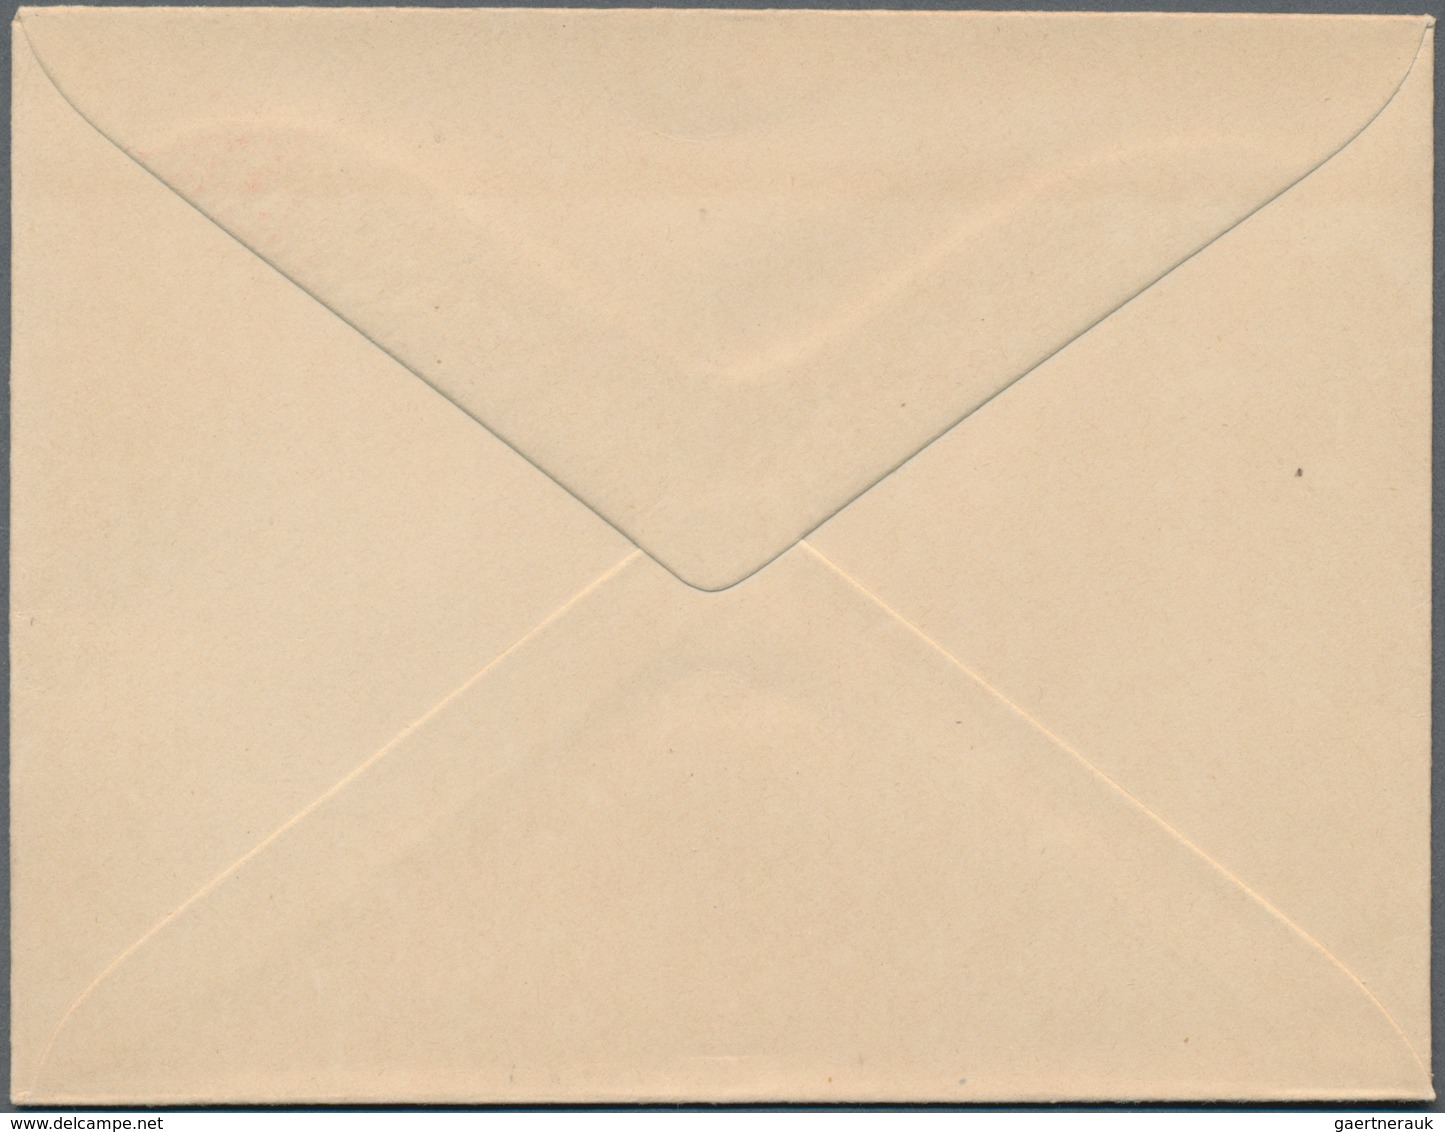 Jungferninseln / Virgin Islands: 1926 Unused Postal Stationery Envelope One Penny Red Head Of King G - British Virgin Islands